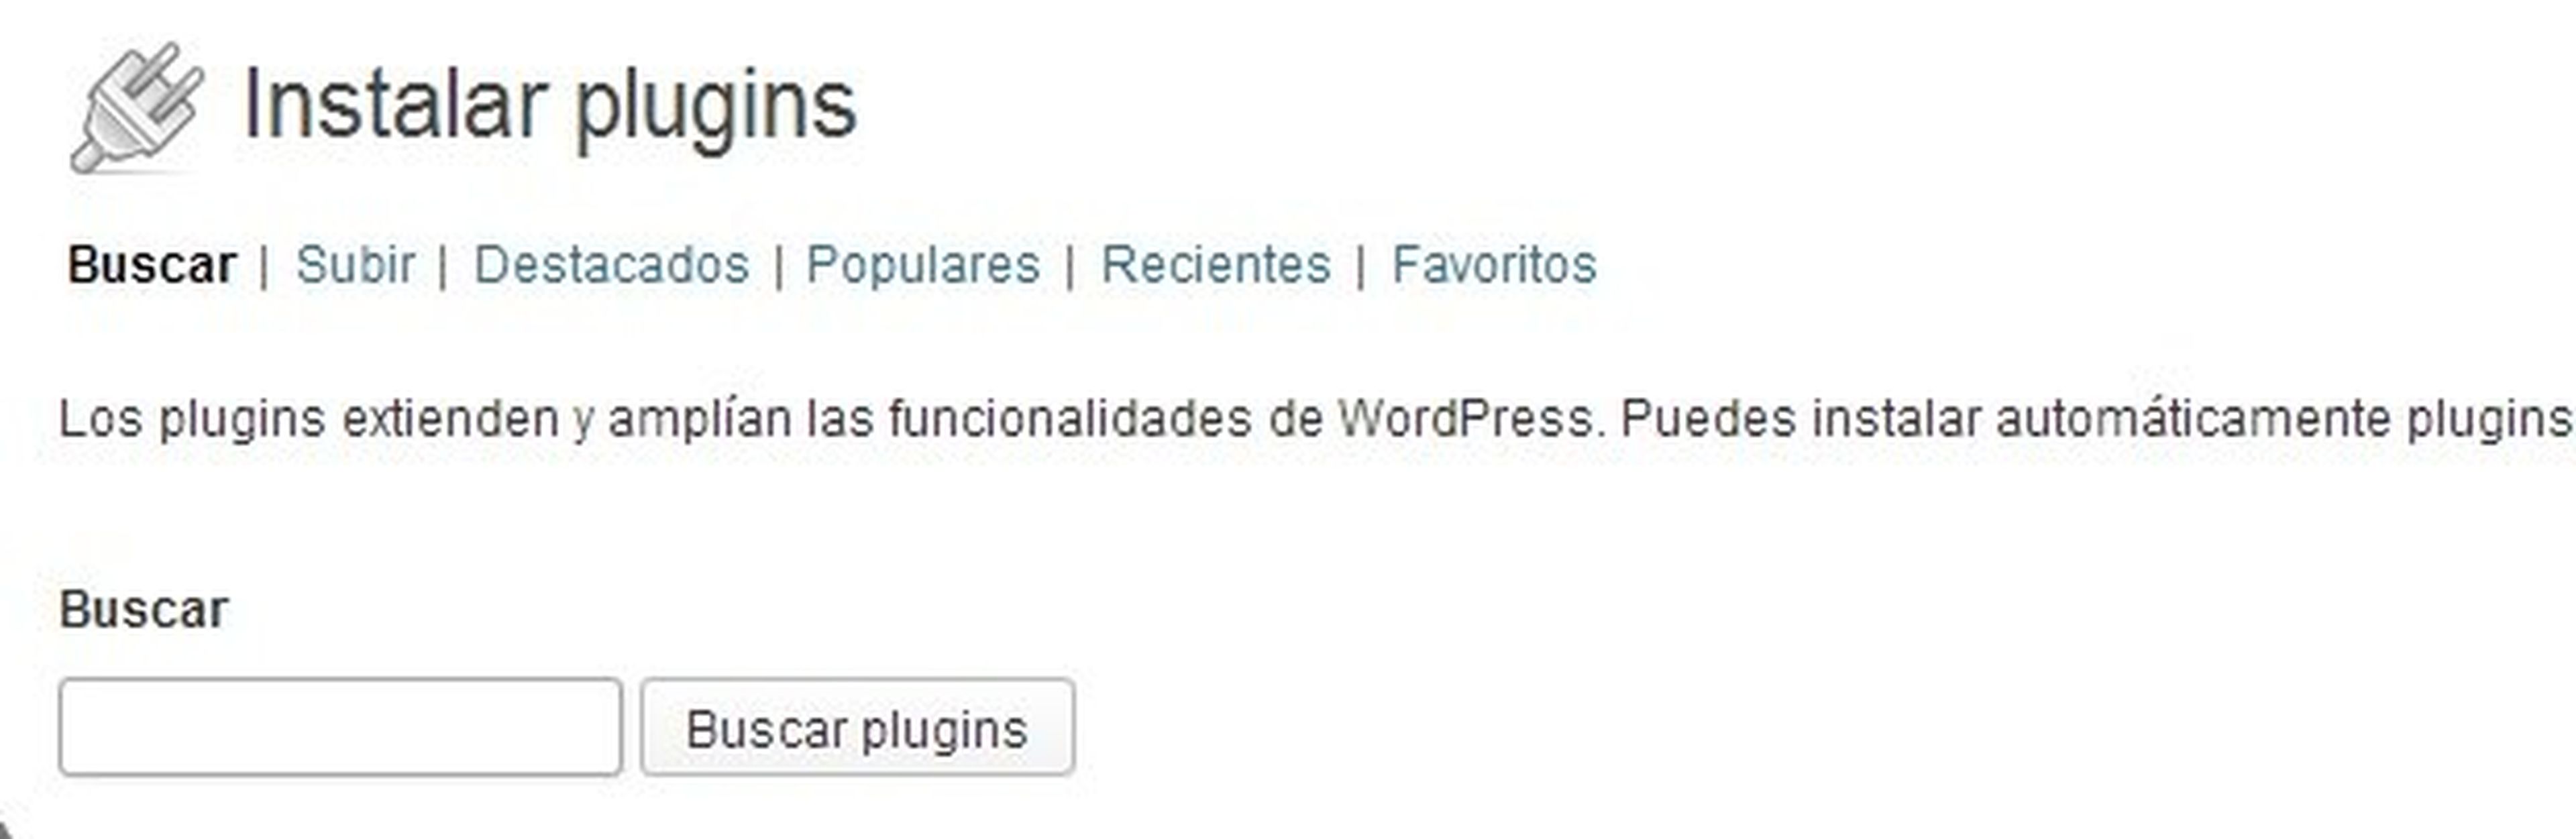 Instalar plugins en WordPress